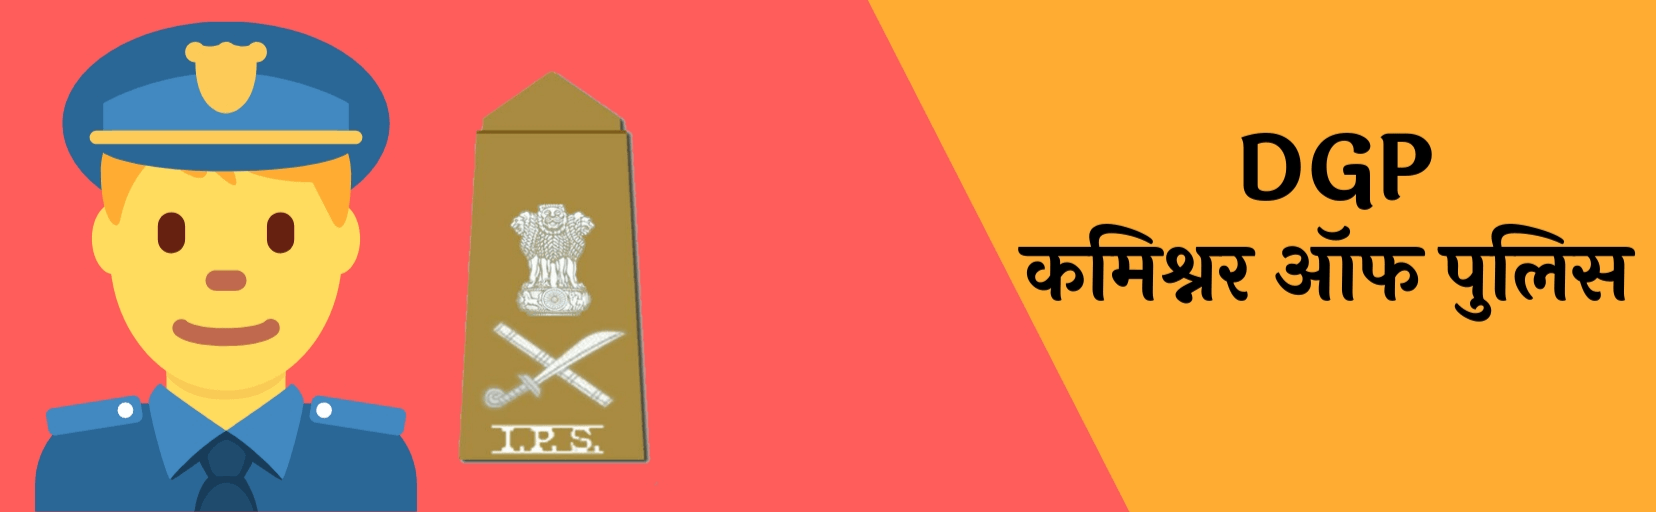 DGP rank list hindi